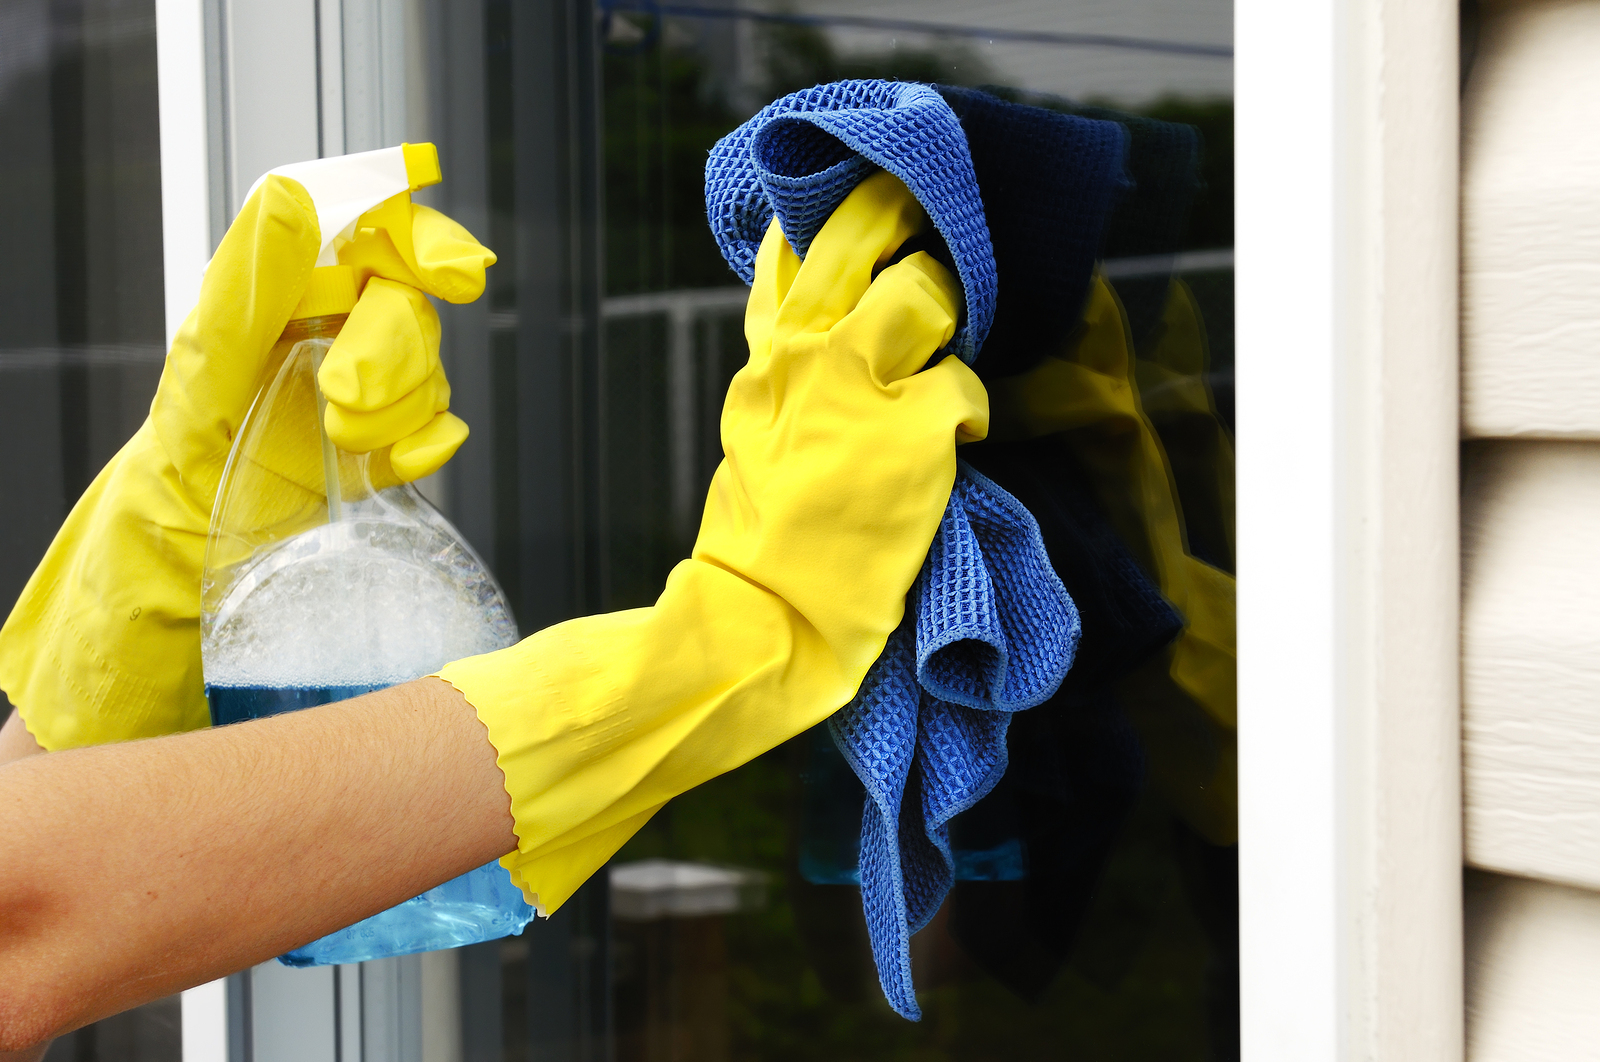 woman polishing glass door using microfiber cloth and yellow latex gloves